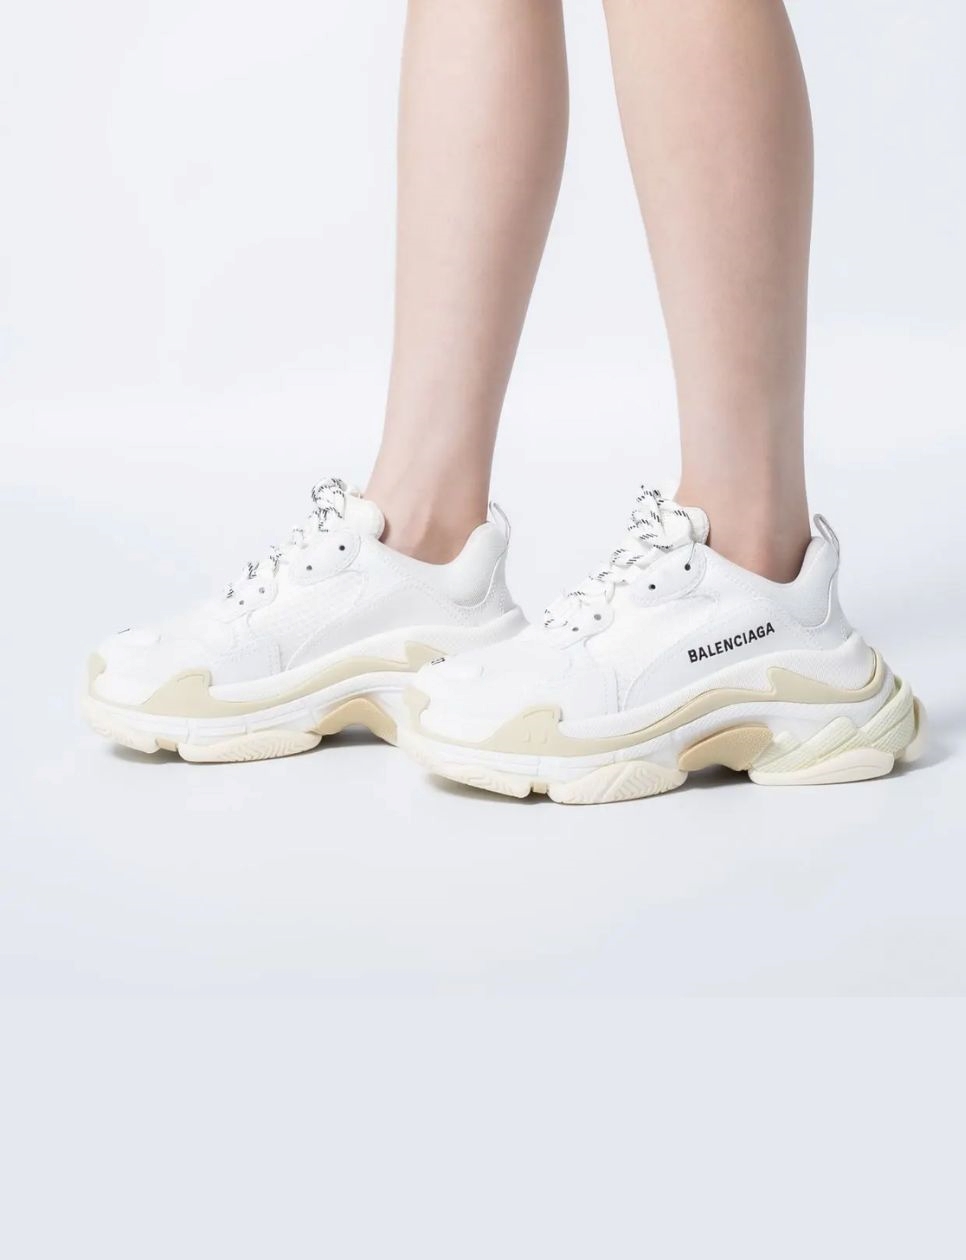 BalenciagaTriple S Sneakers Double Foam and Mesh White Women